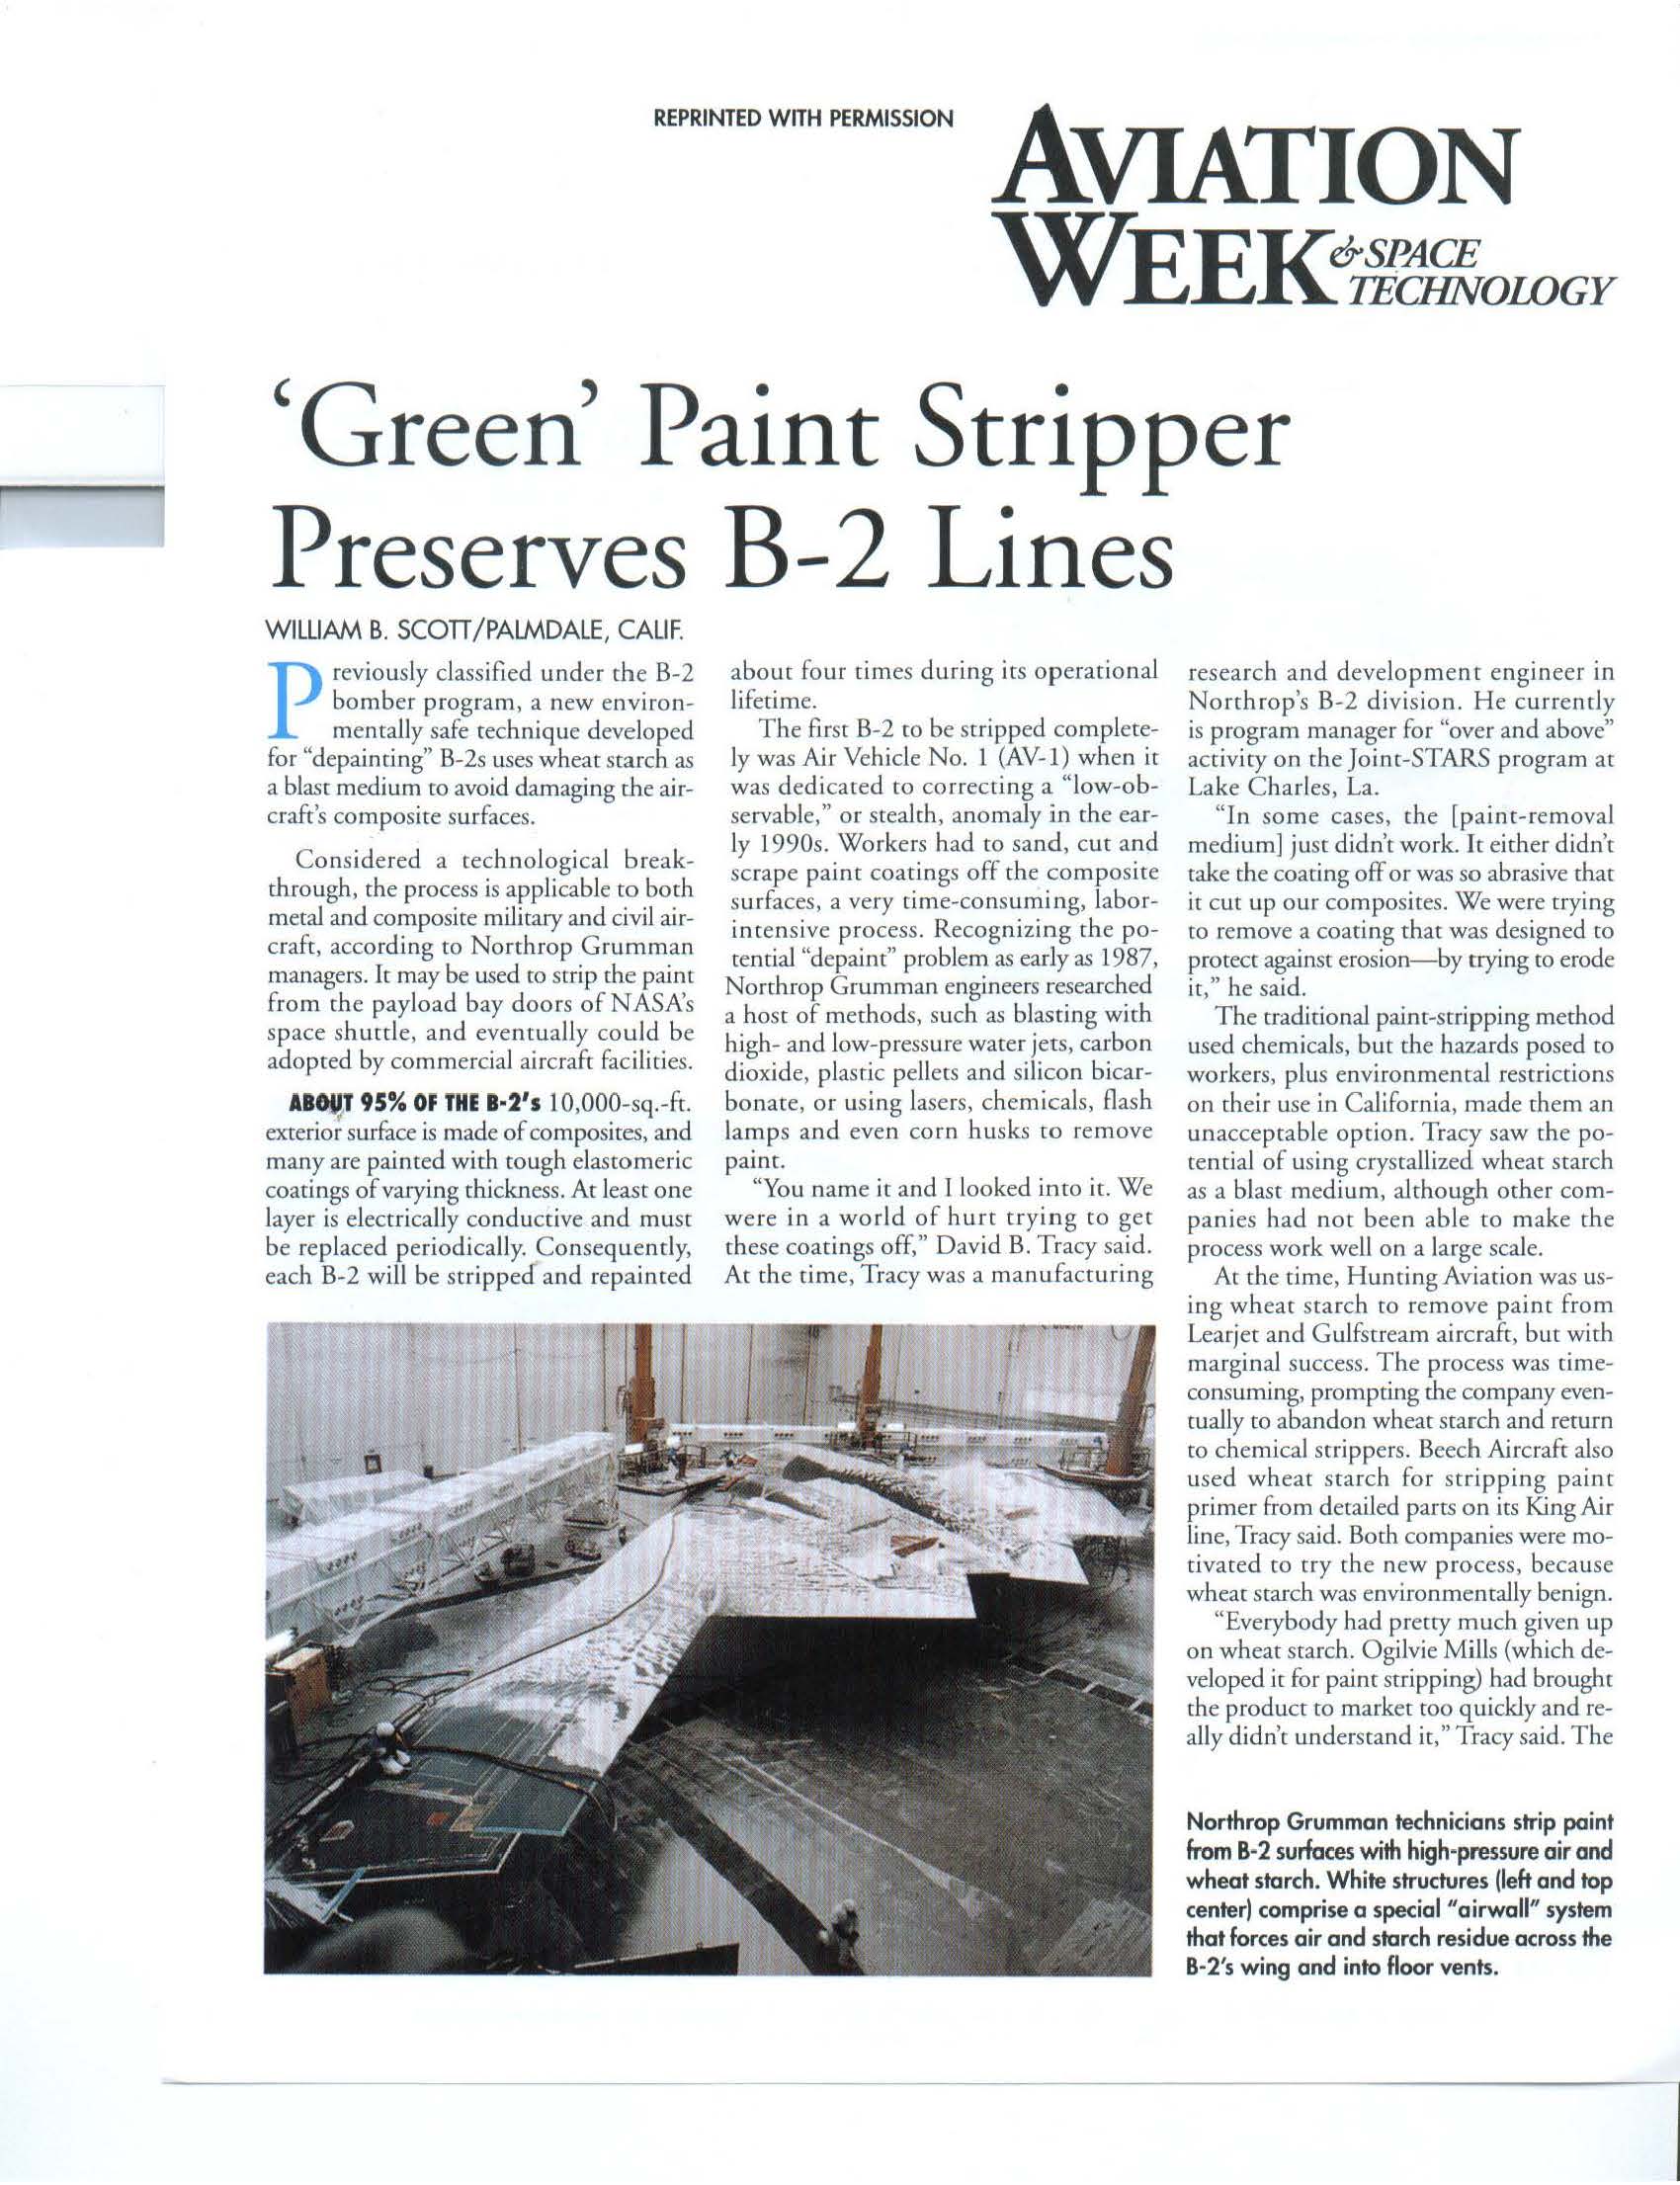 Aviation Week, Green Paint Stripper Article